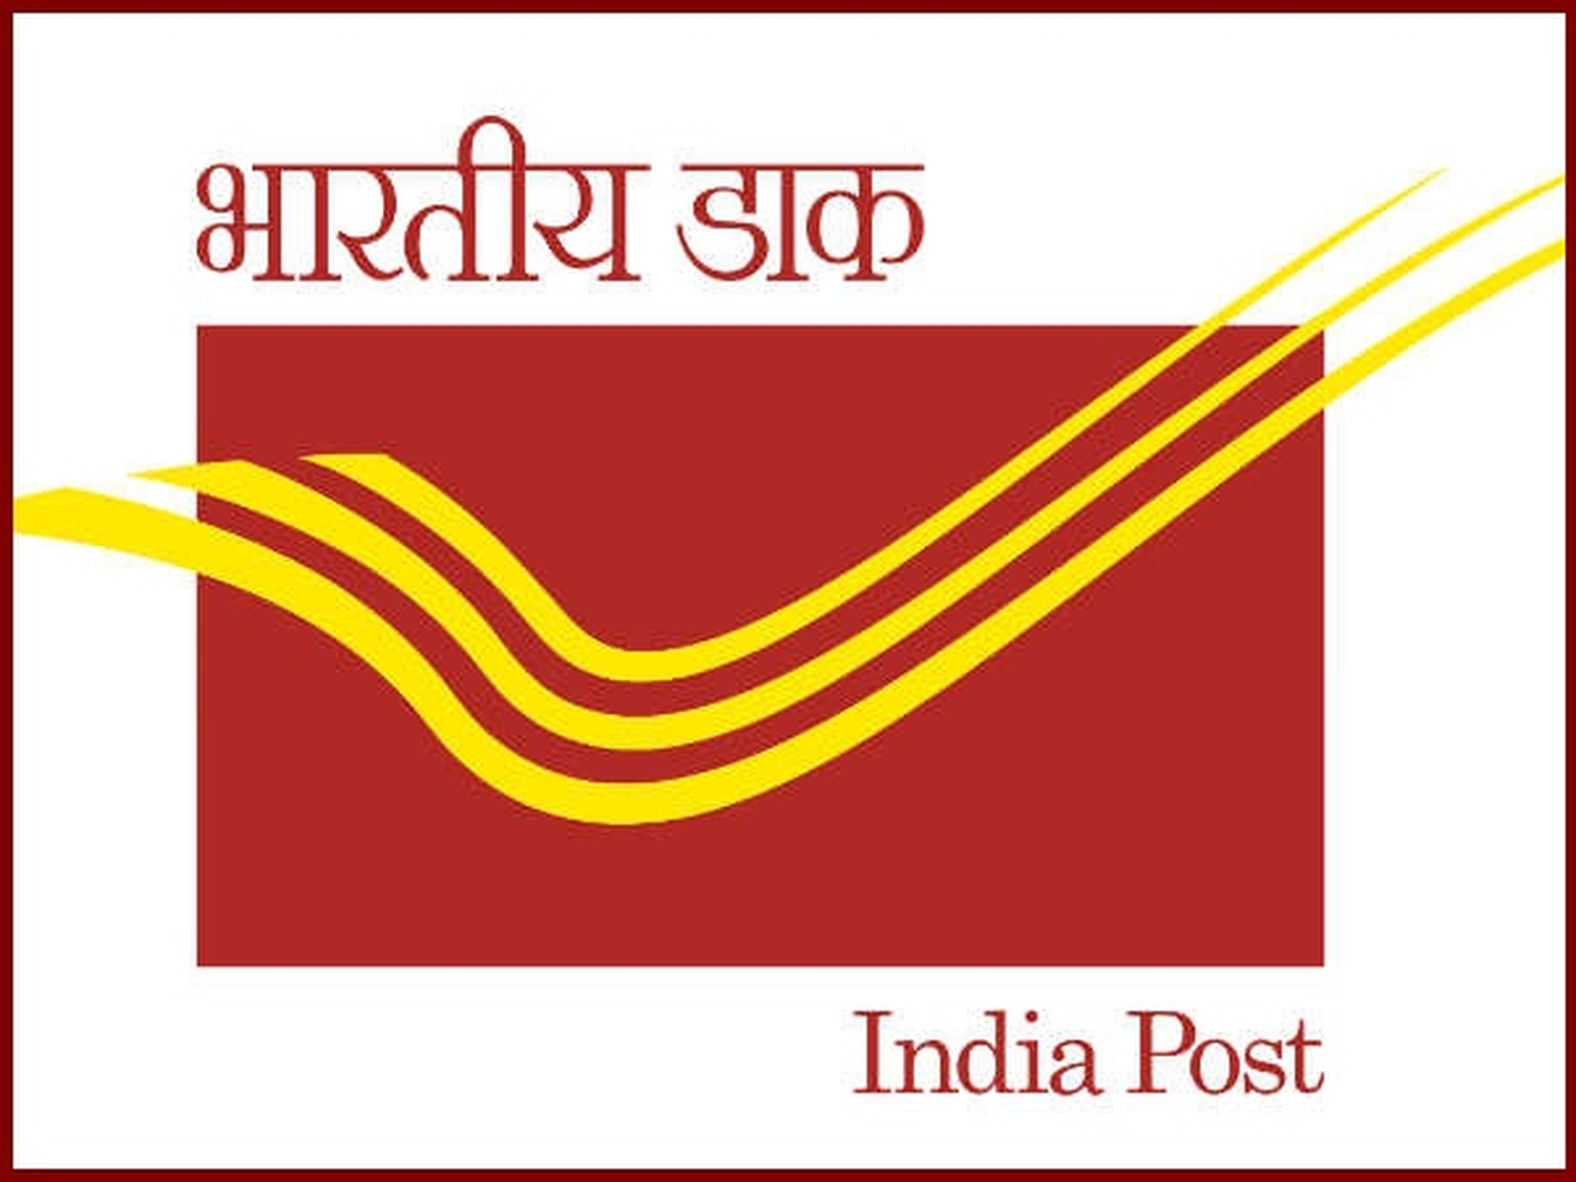 india post